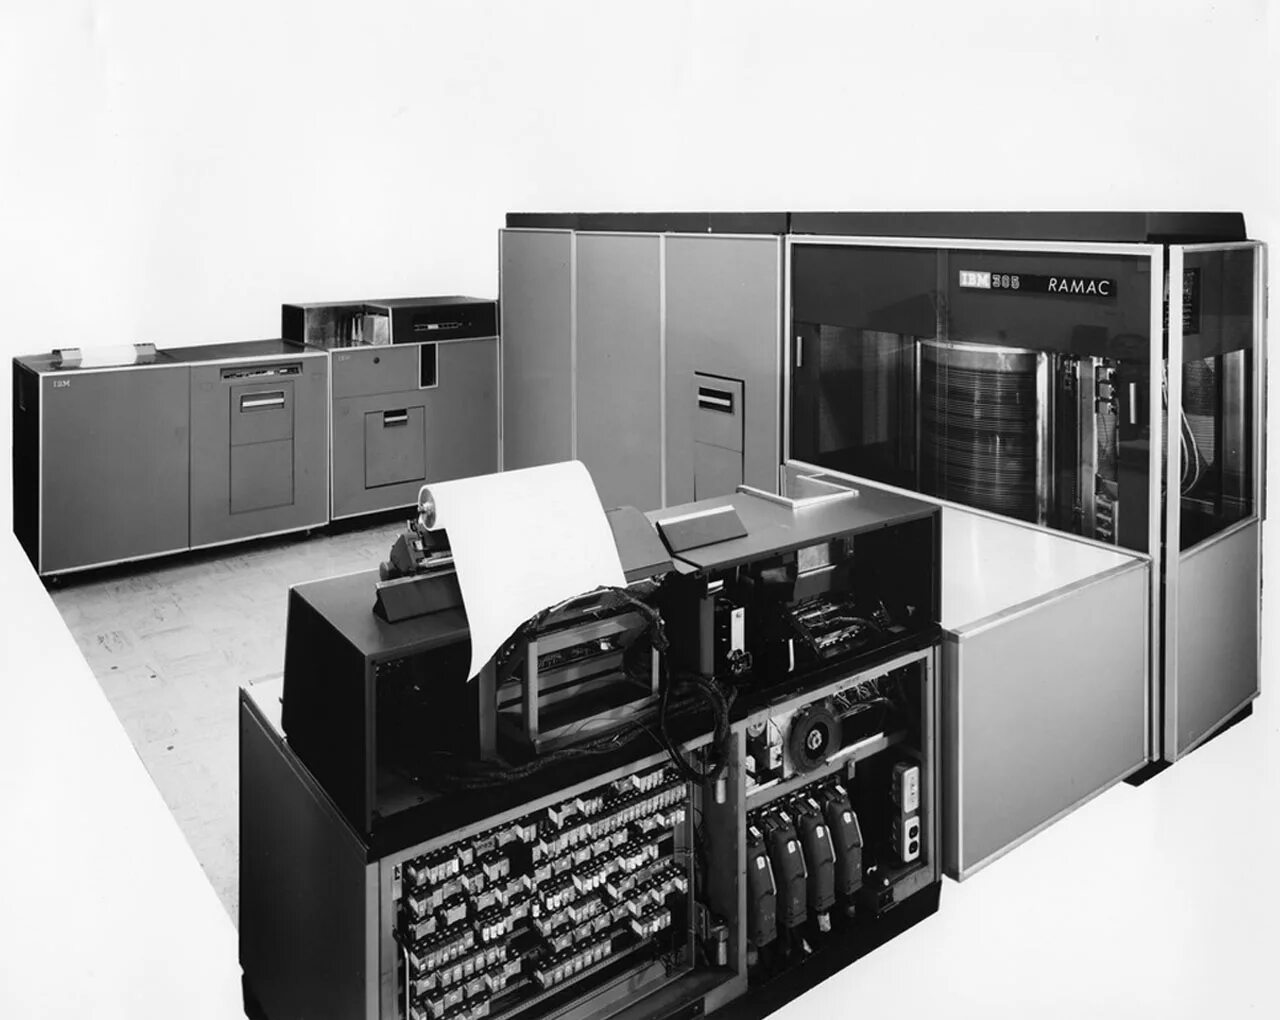 IBM 305 Ramac. Жёсткий диск IBM 305 Ramac 1956. HDD Ramac 305. Первый жёсткий диск Ramac 305. Создание ibm